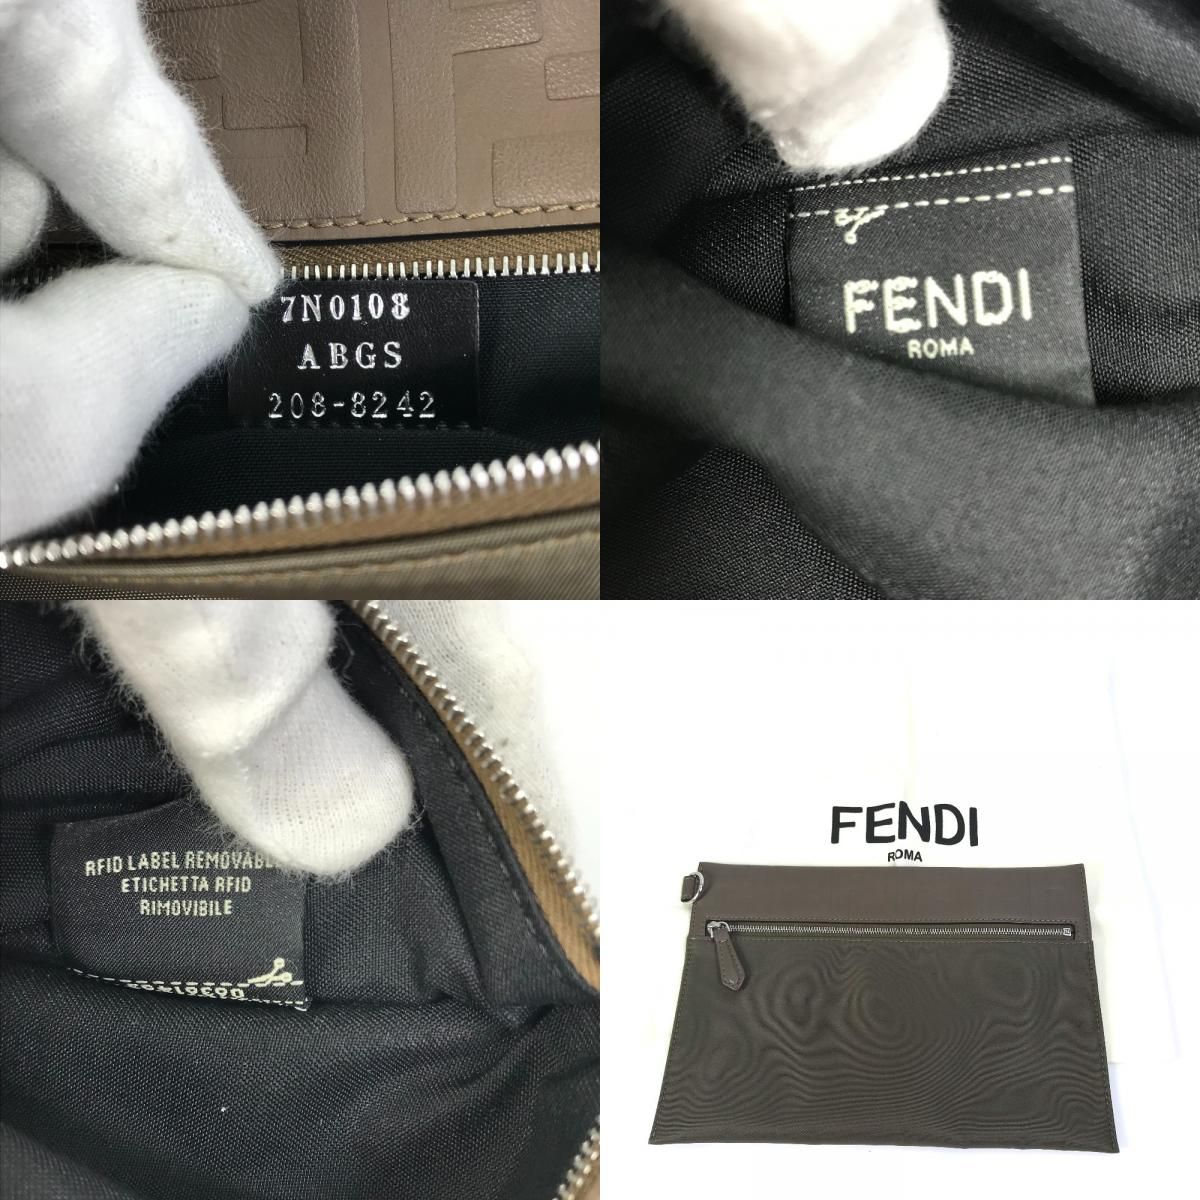 FENDI フェンディ ポーチ 7N0108 ナイロン/レザー